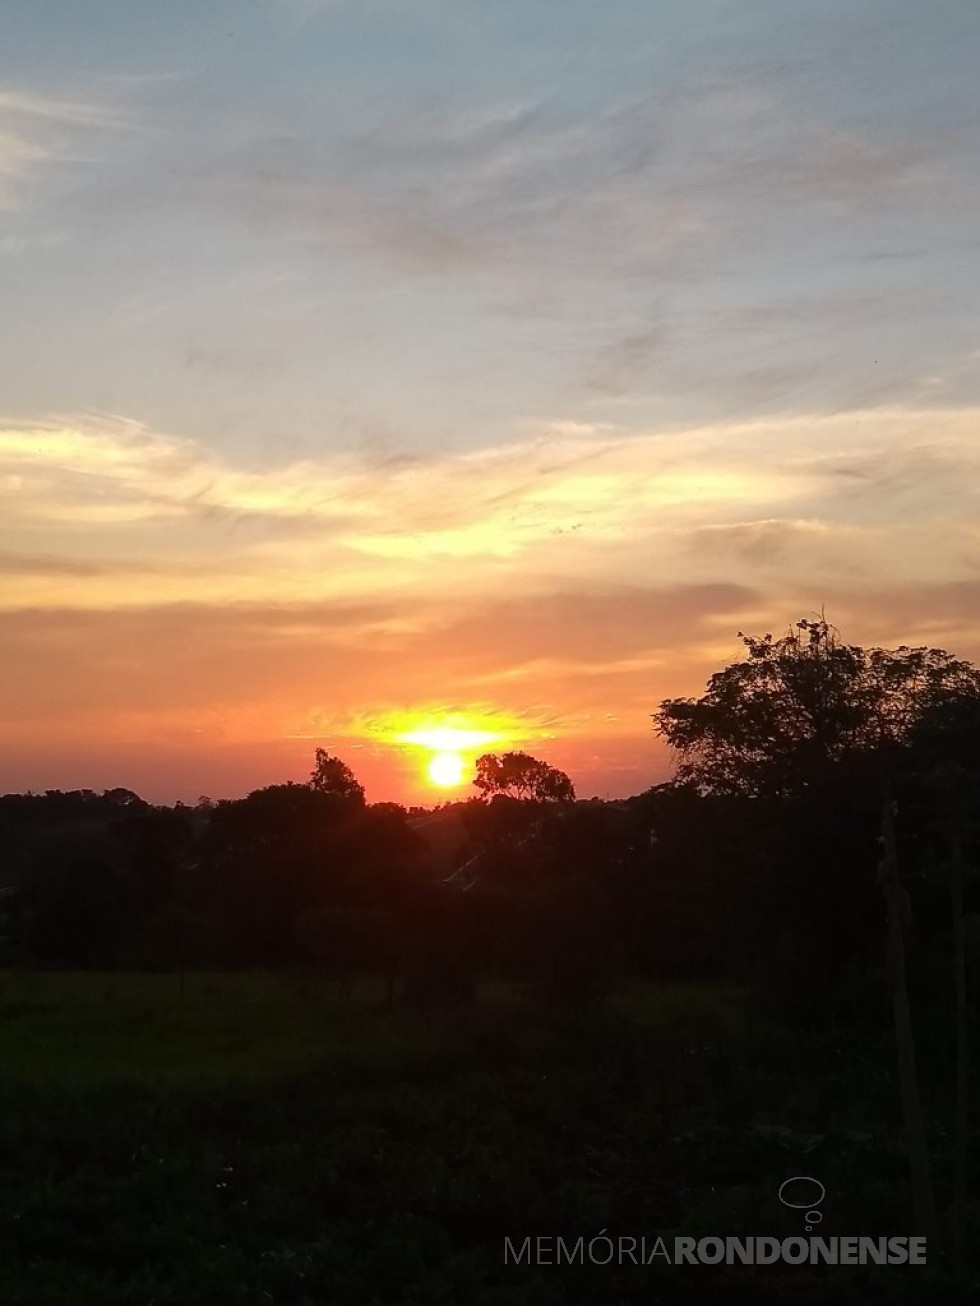 || Pôr do sol na cidade de Marechal Cândido Rondon em 22 de outubro de 2023.
Imagem: Acervo e crédito do rondonense Valdemir José Sonda - FOTO 17 - 